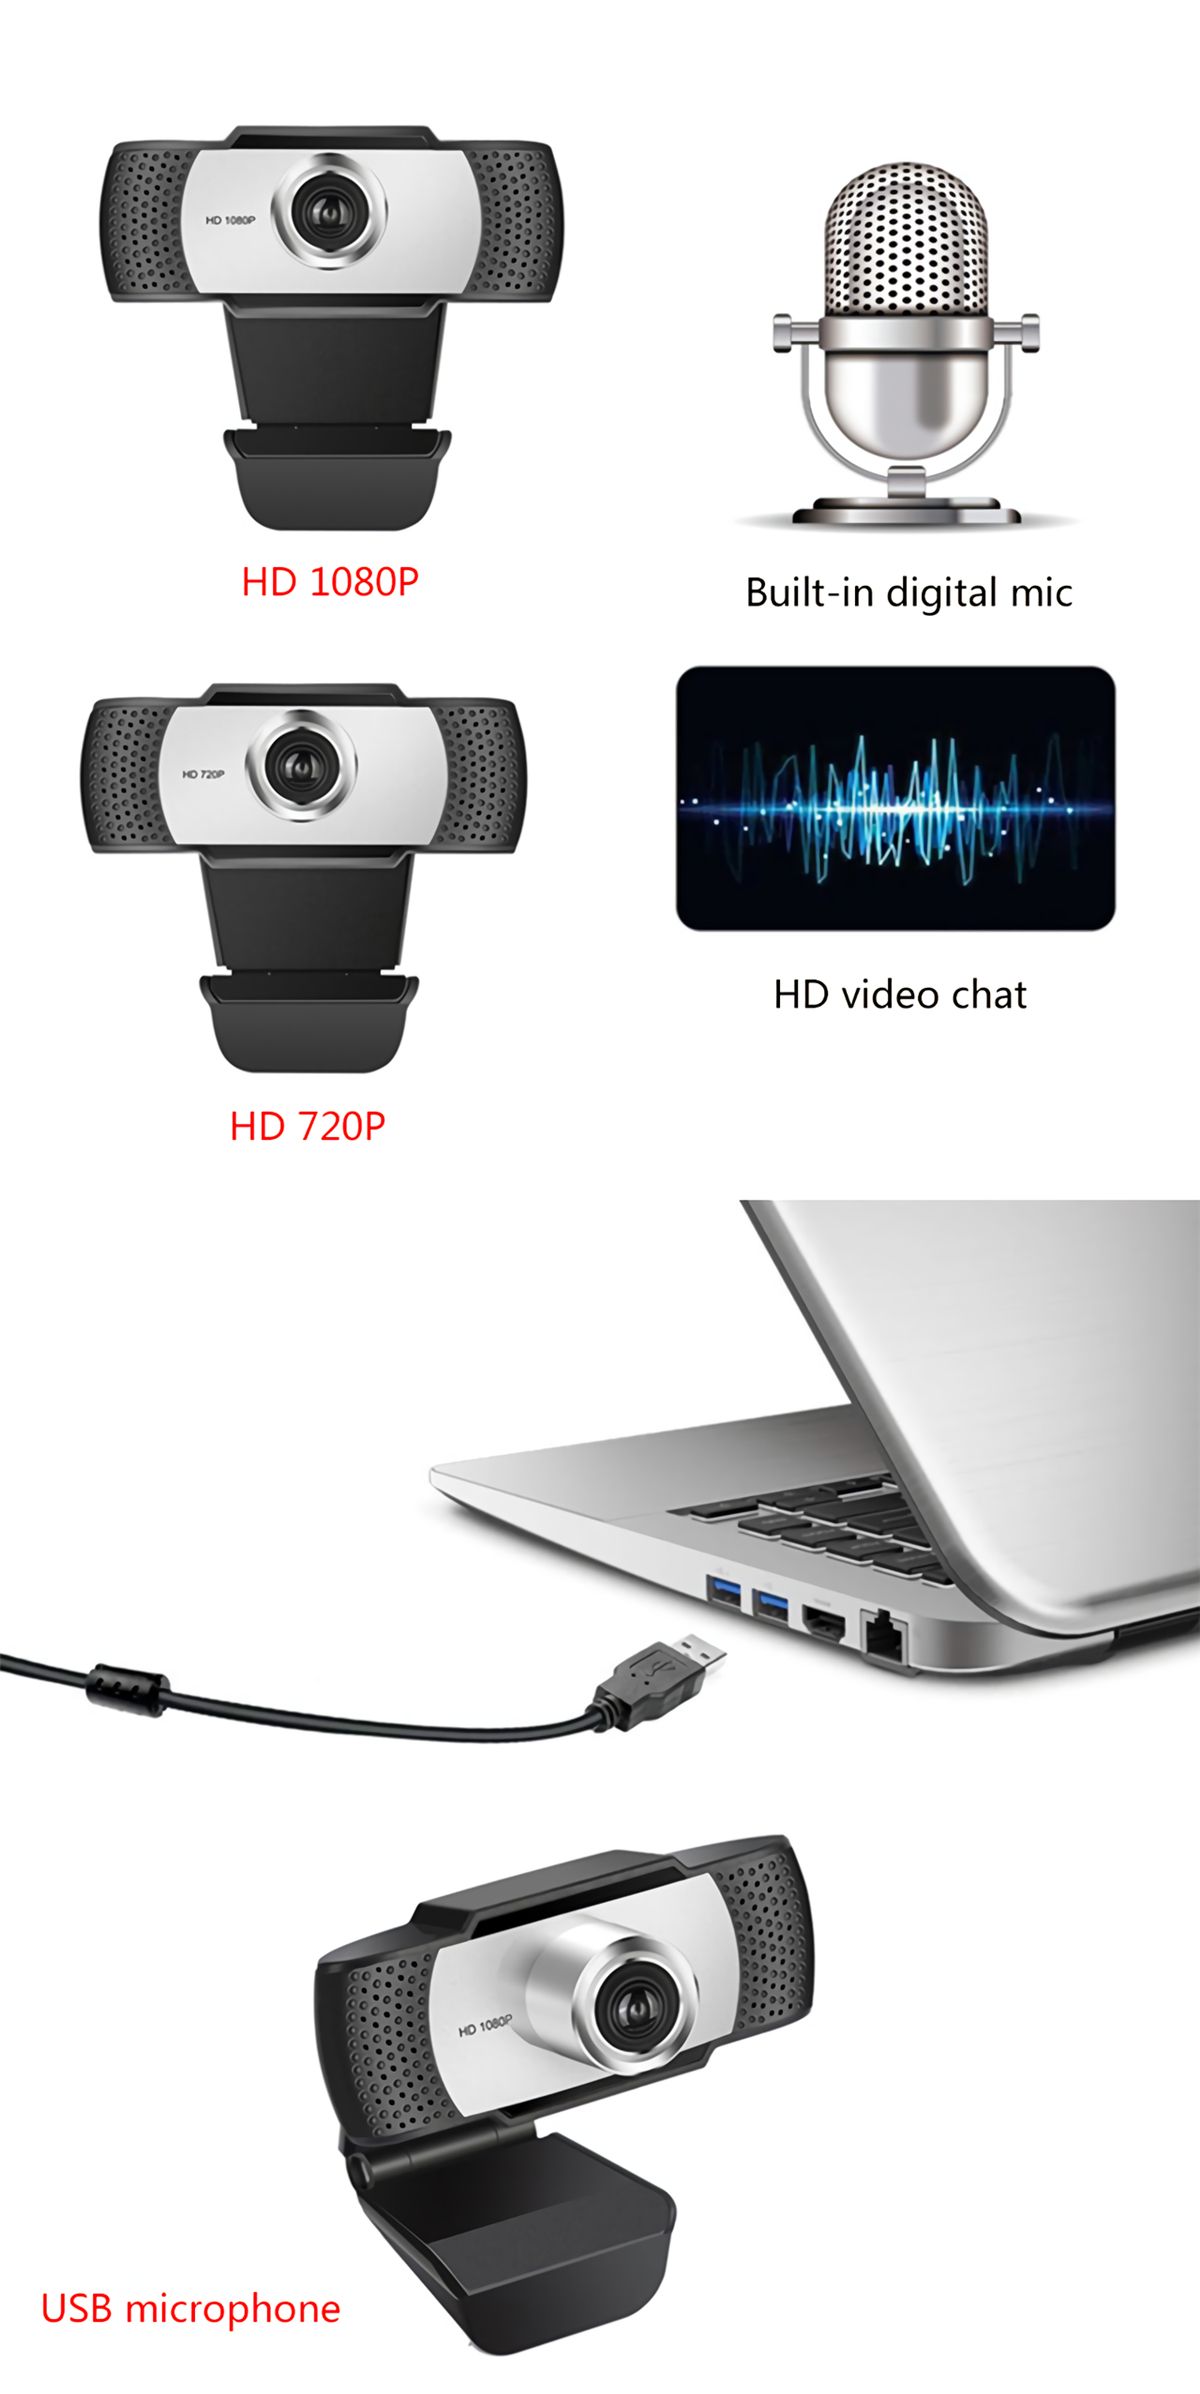 A8-HD-1080P-Webcam-CMOS-30FPS-USB-20-Built-in-Microphone-Webcam-HD-Camera-for-Desktop-Computer-Noteb-1663043